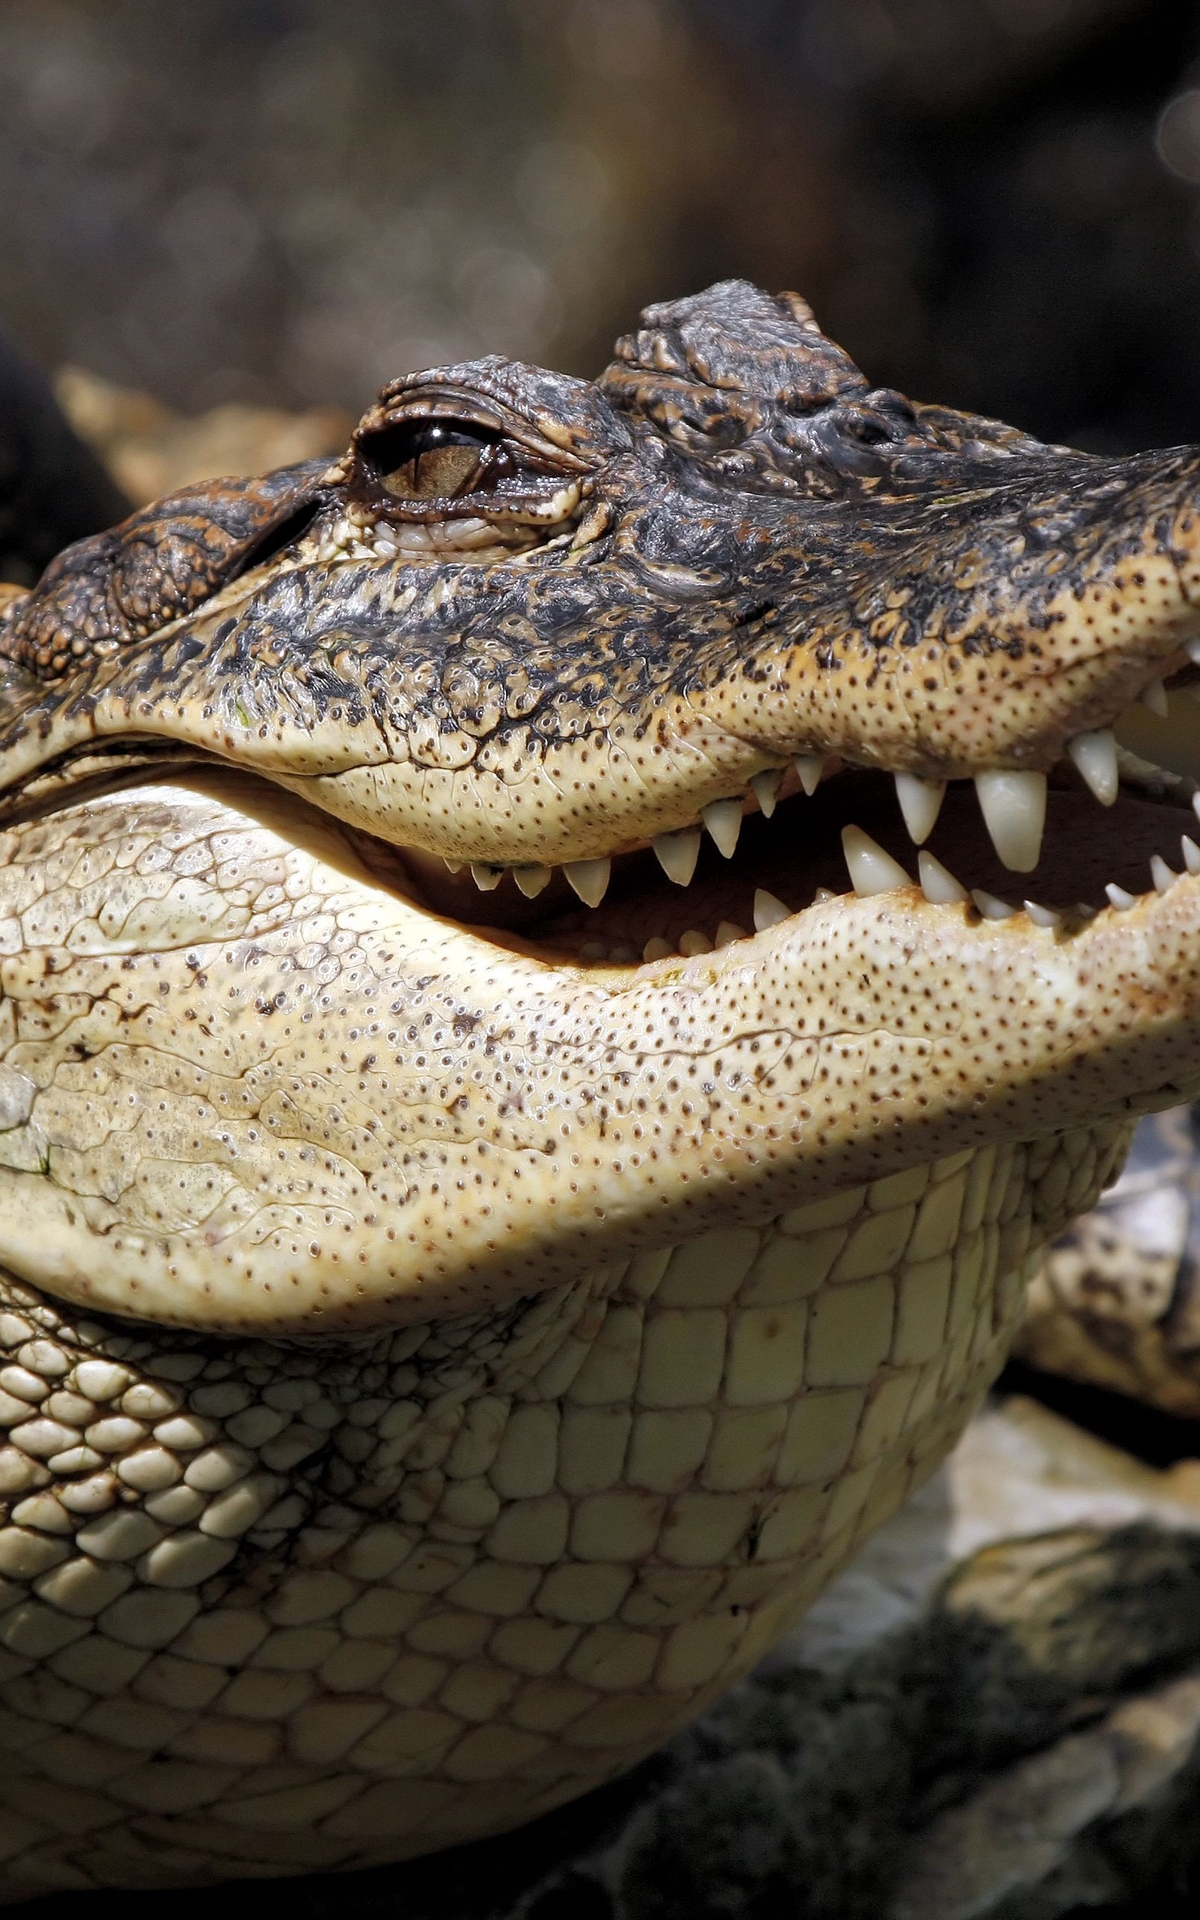 Image: Alligator, crocodile, reptile, predator, heated, teeth, mouth